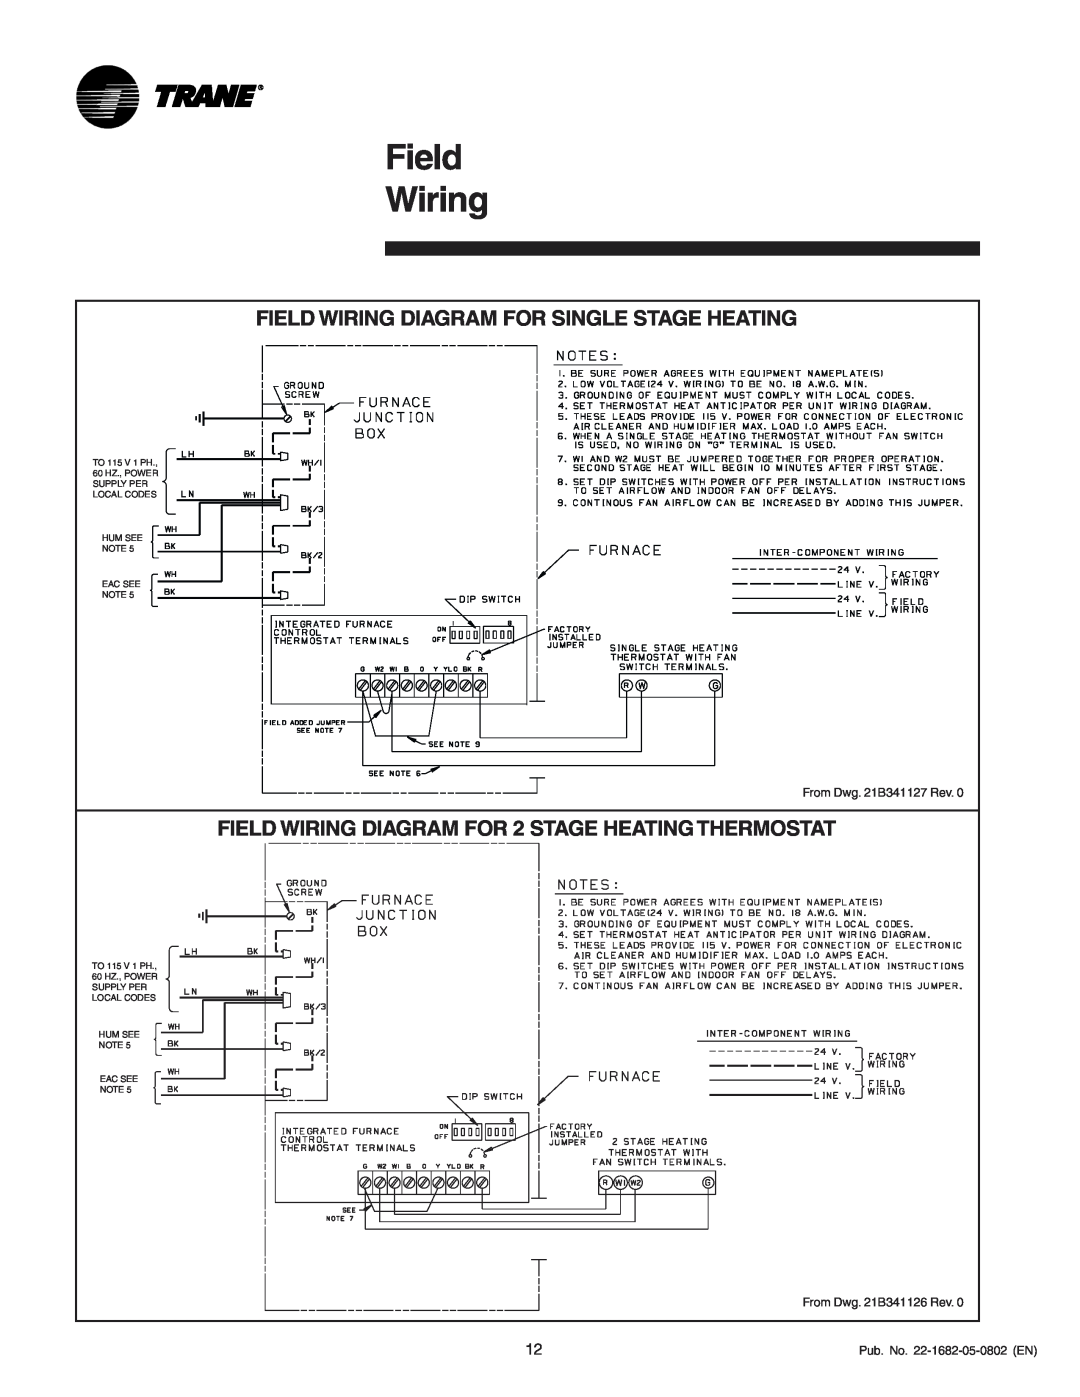 Trane 080, XV 90, 120R9V, 100 manual Field Wiring Diagram For Single Stage Heating 